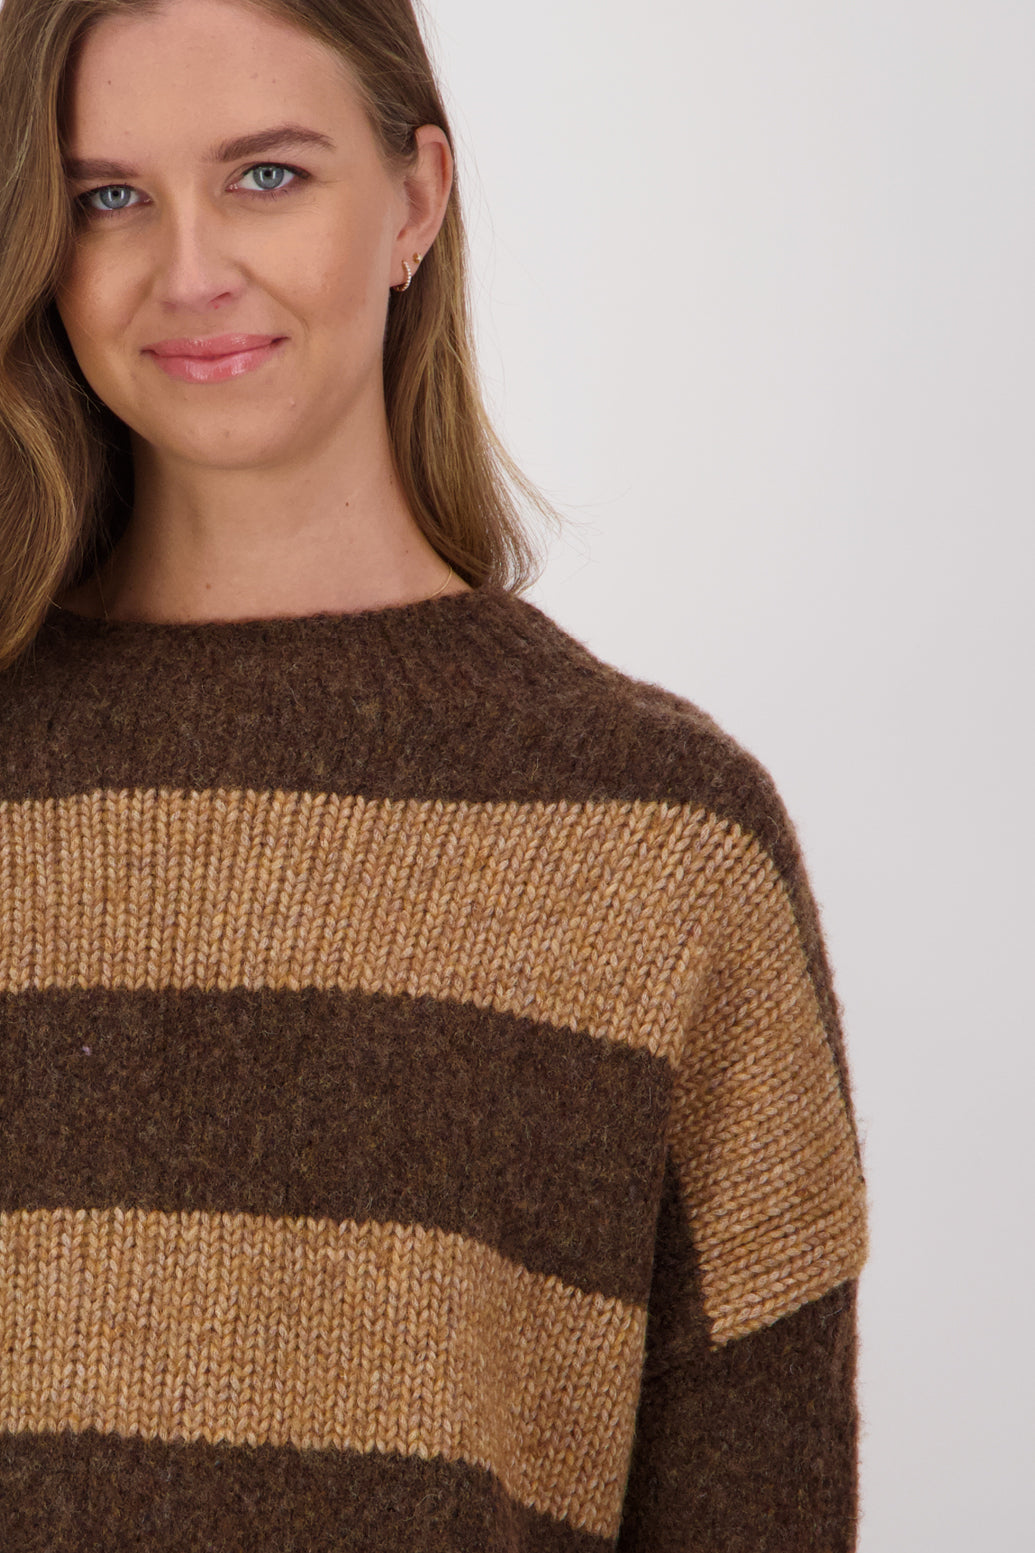 Diaz Chocolate/Camel Wool Blend Sweater